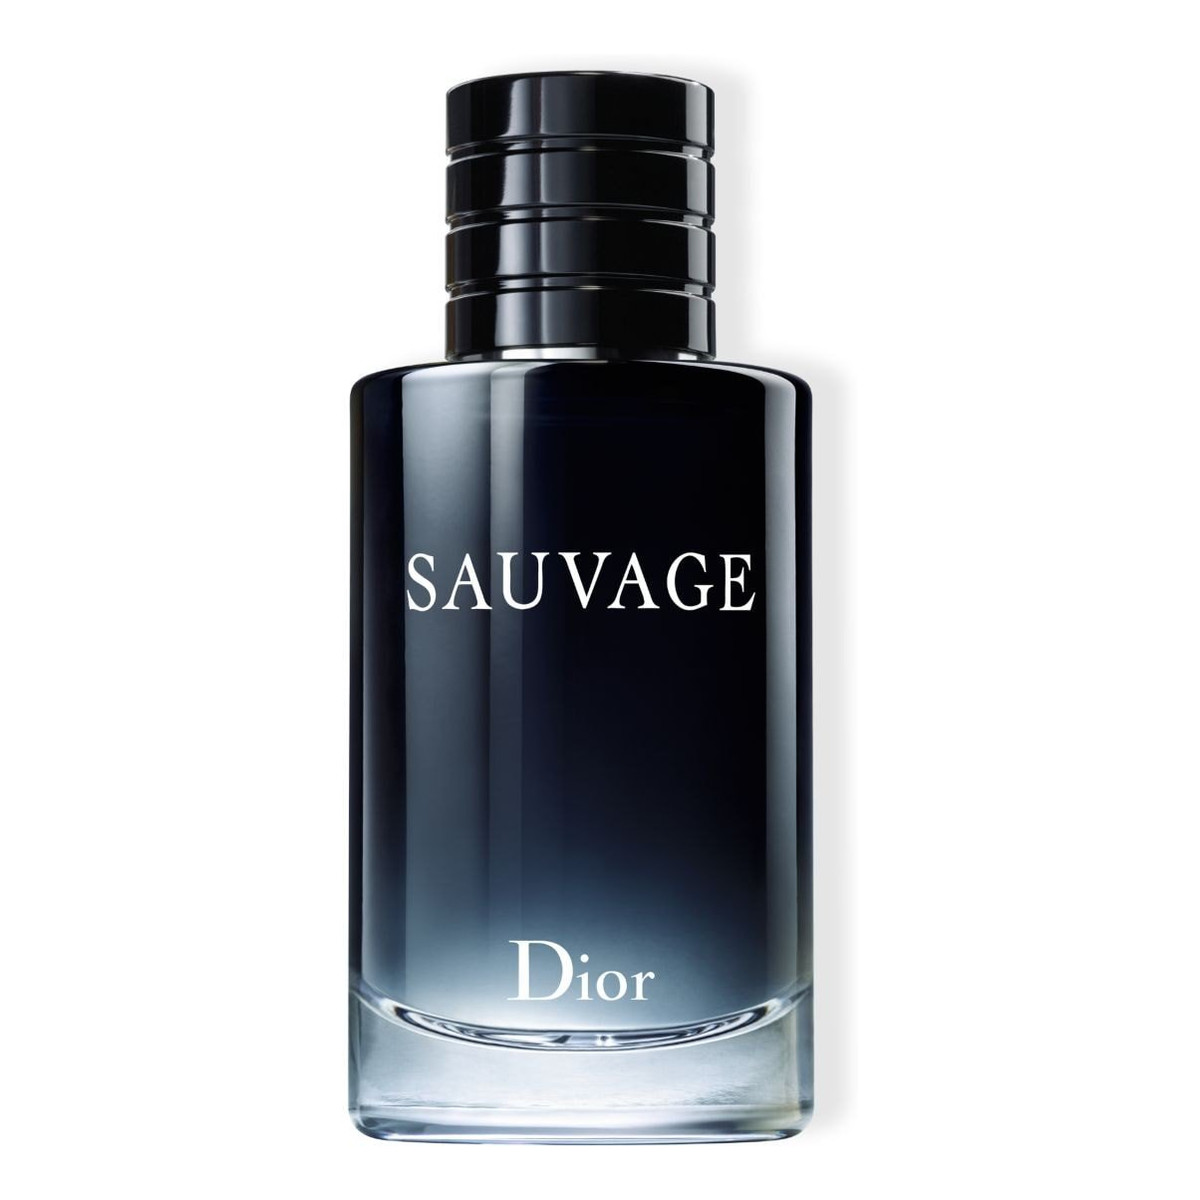 Dior Sauvage woda toaletowa 200ml